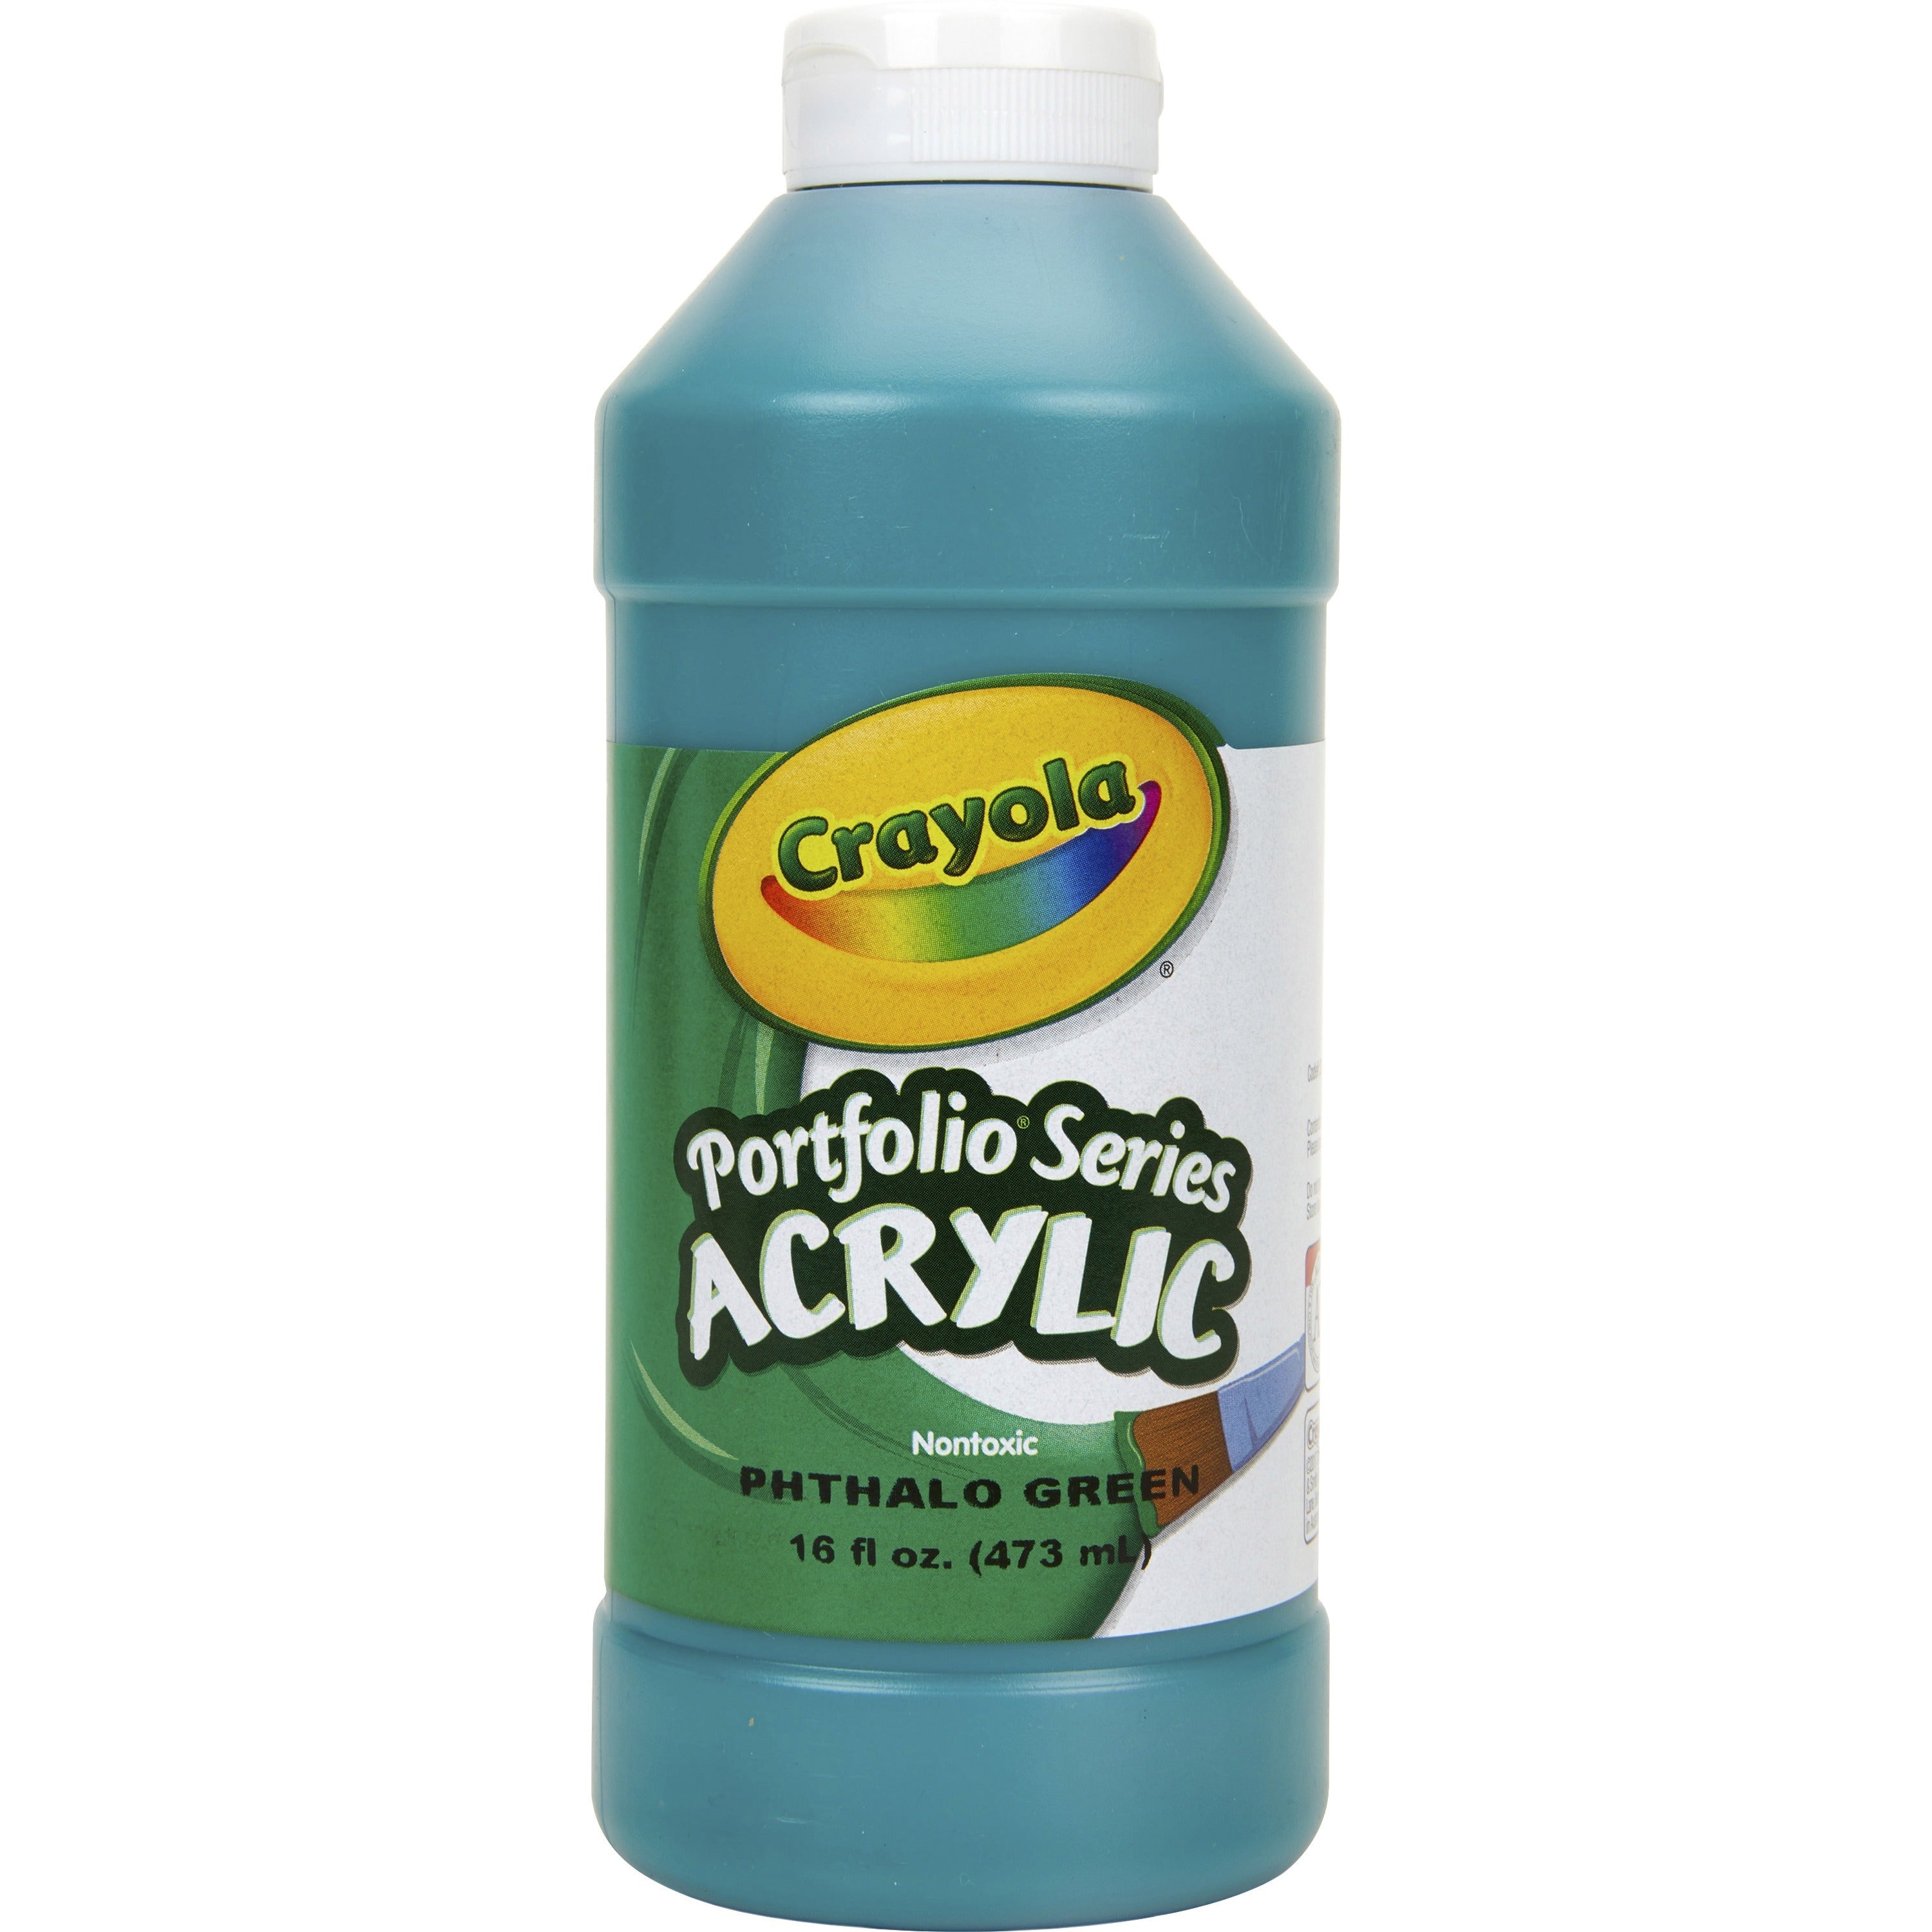 crayola-portfolio-series-acrylic-paint-16-fl-oz-1-each-phthalo-green_cyo204016317 - 1